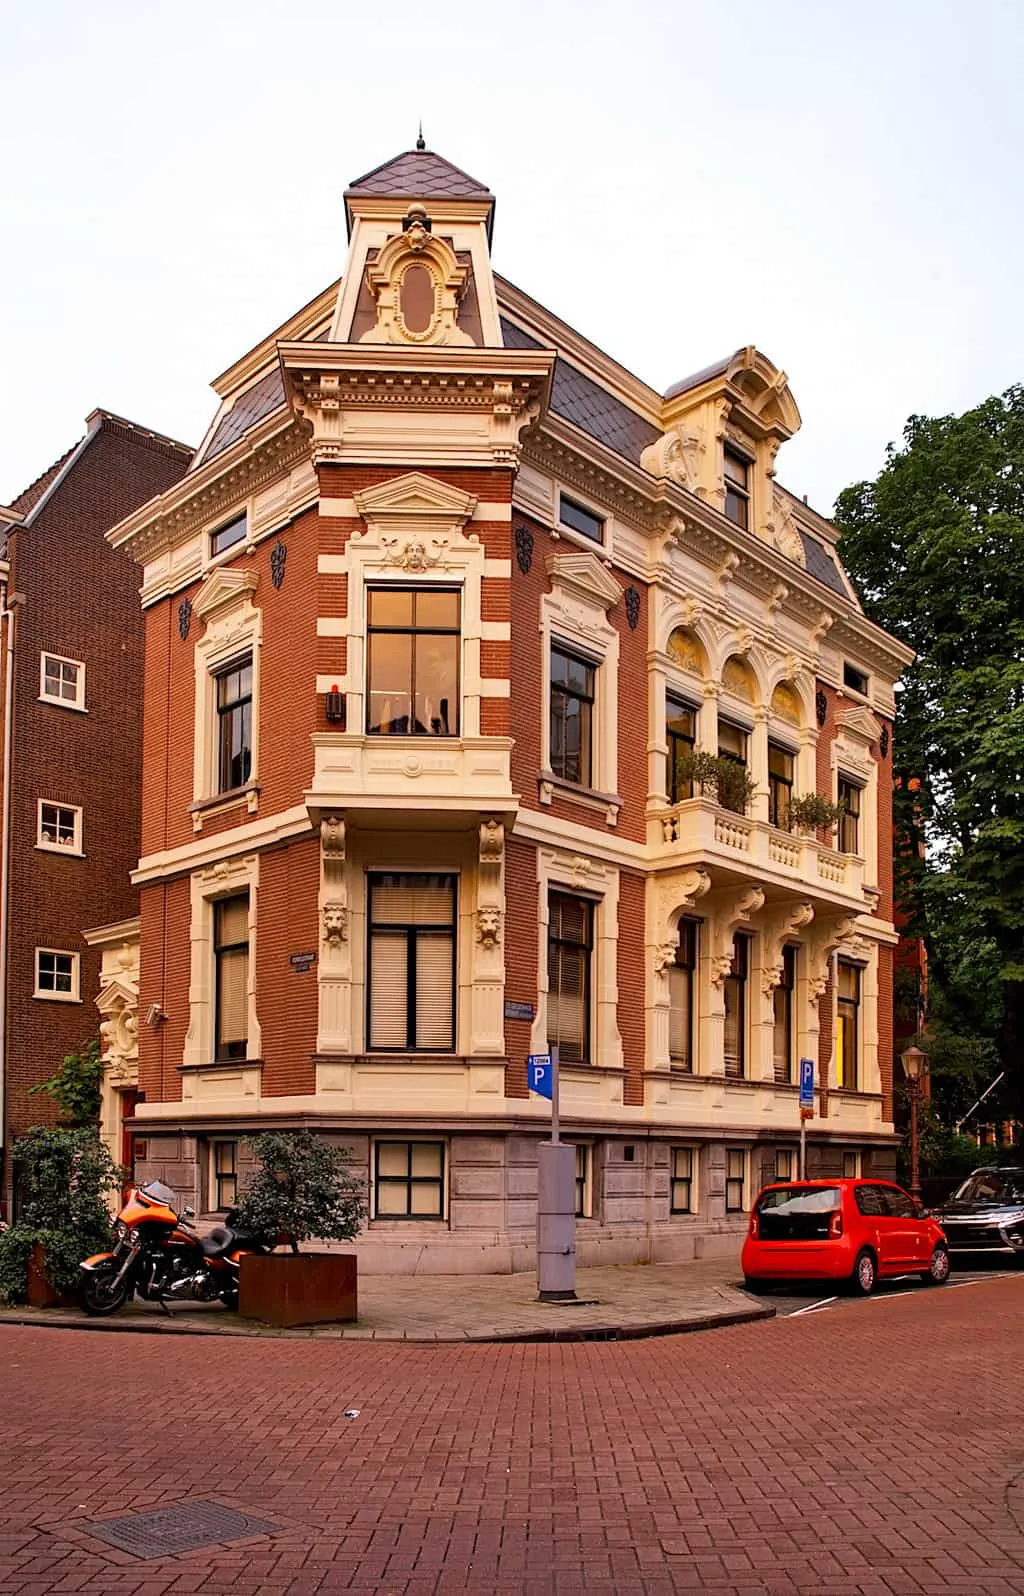 A house on Vondelstraat street in Amsterdam. Netherlands